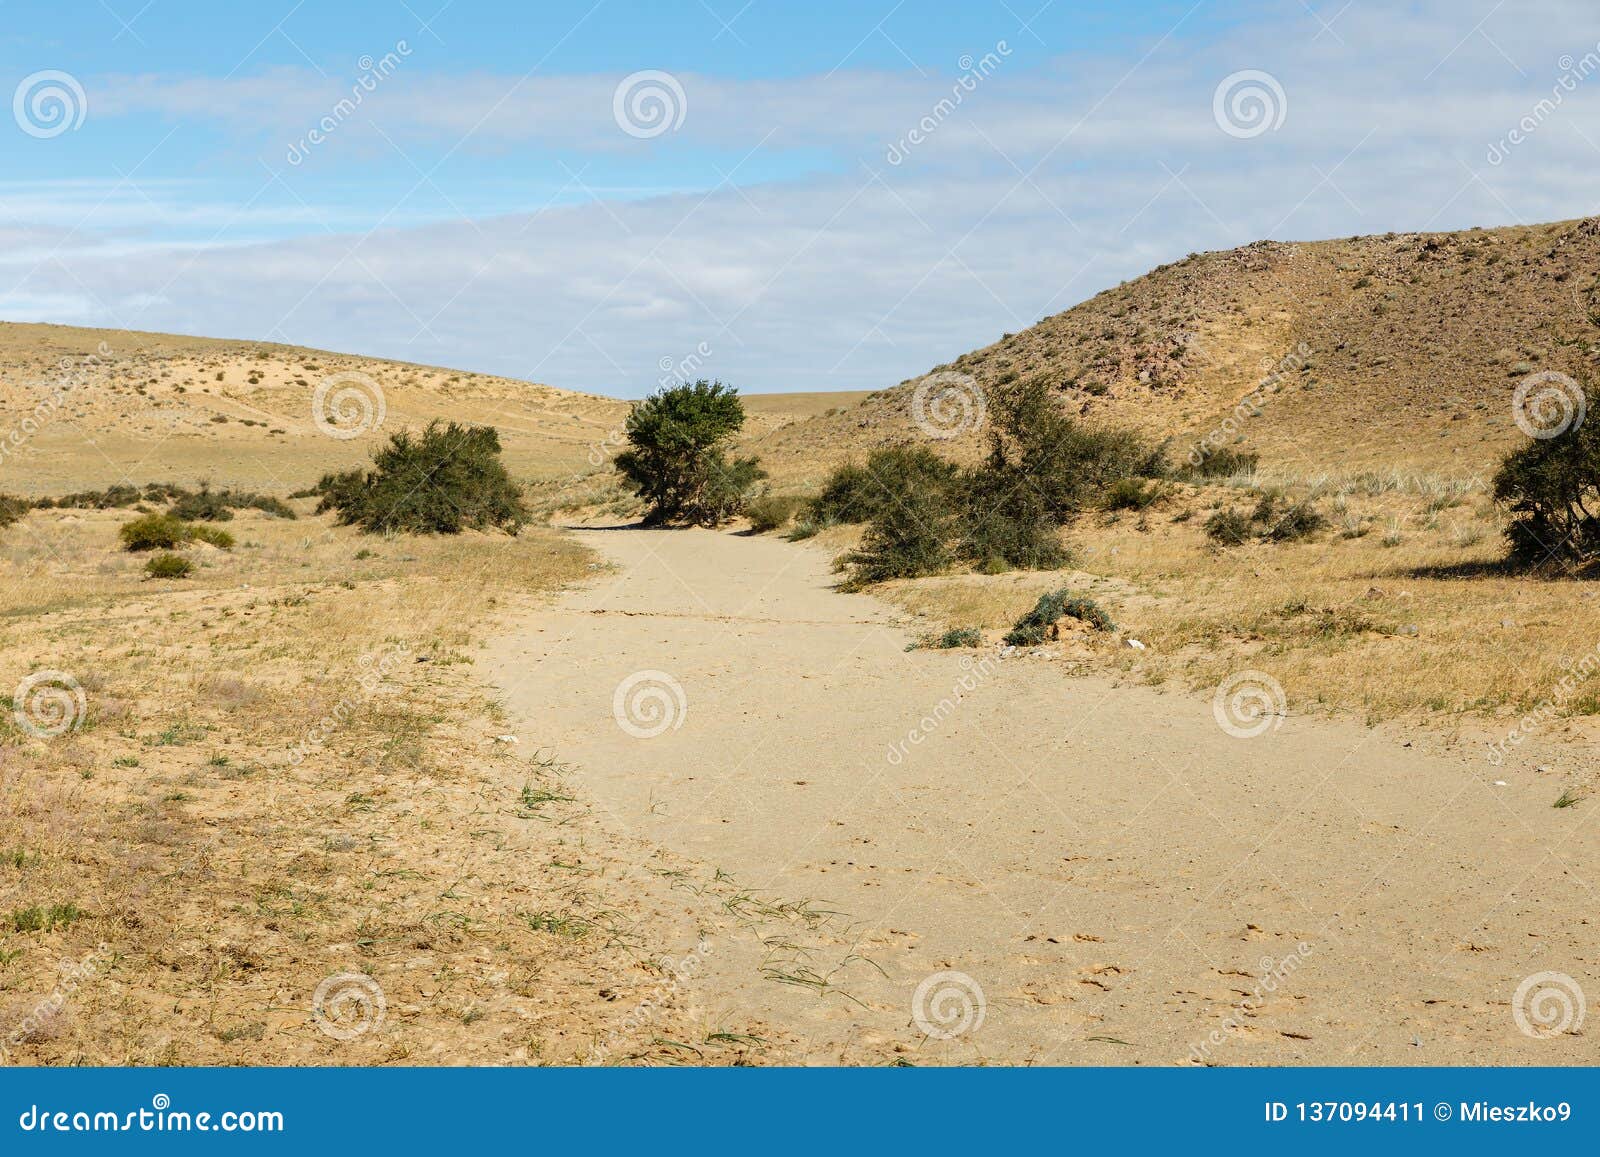 Bed of the Dried River in the Desert, Gobi Desert, Mongolia Stock Image -  Image of horizon, destinations: 137094411